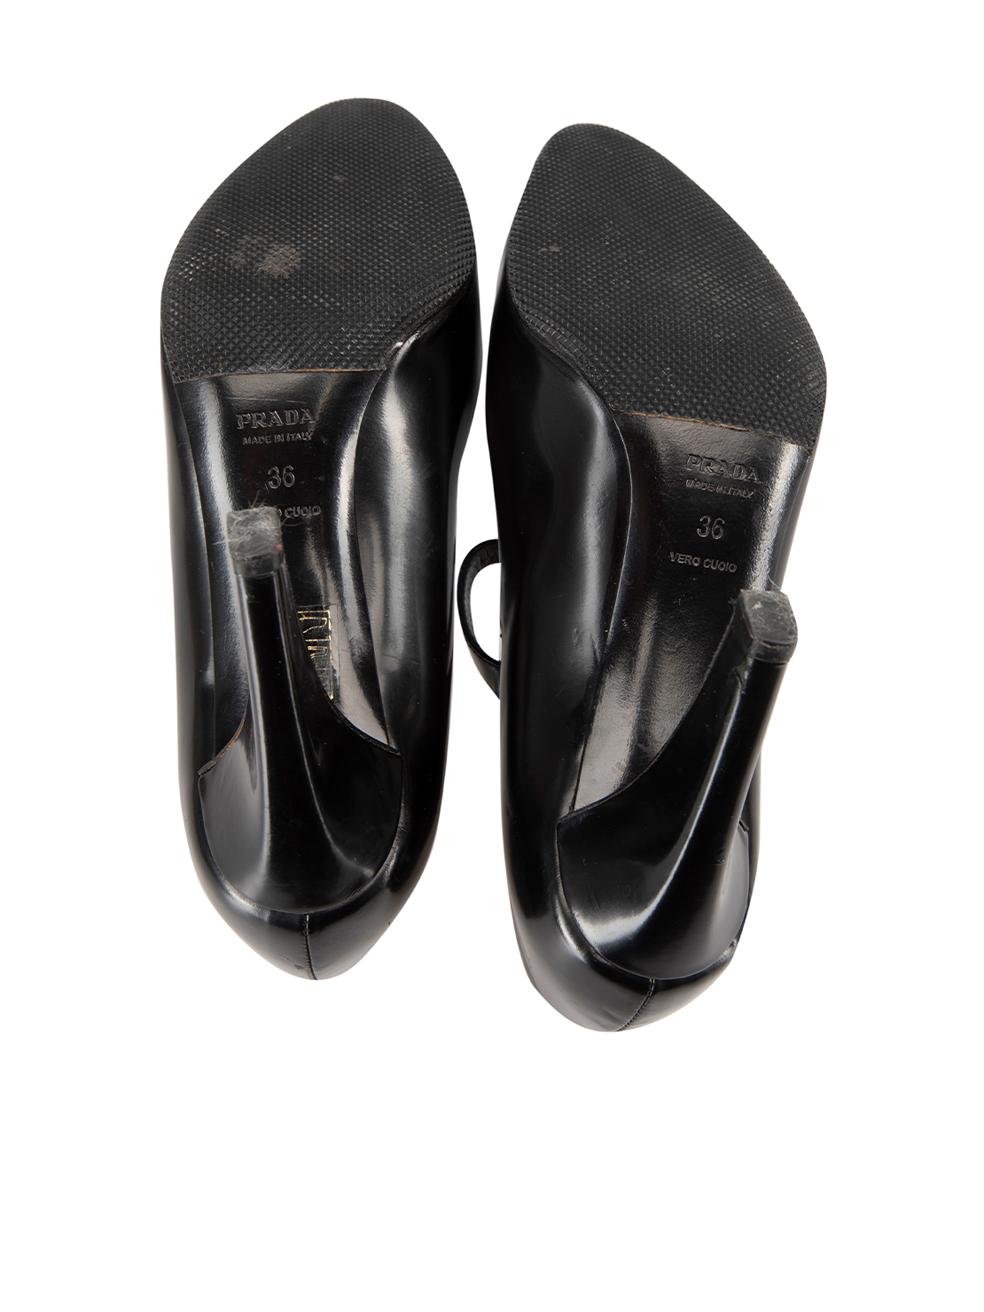 Prada Women's Black Leather Buckled Mary Jane Heels 2